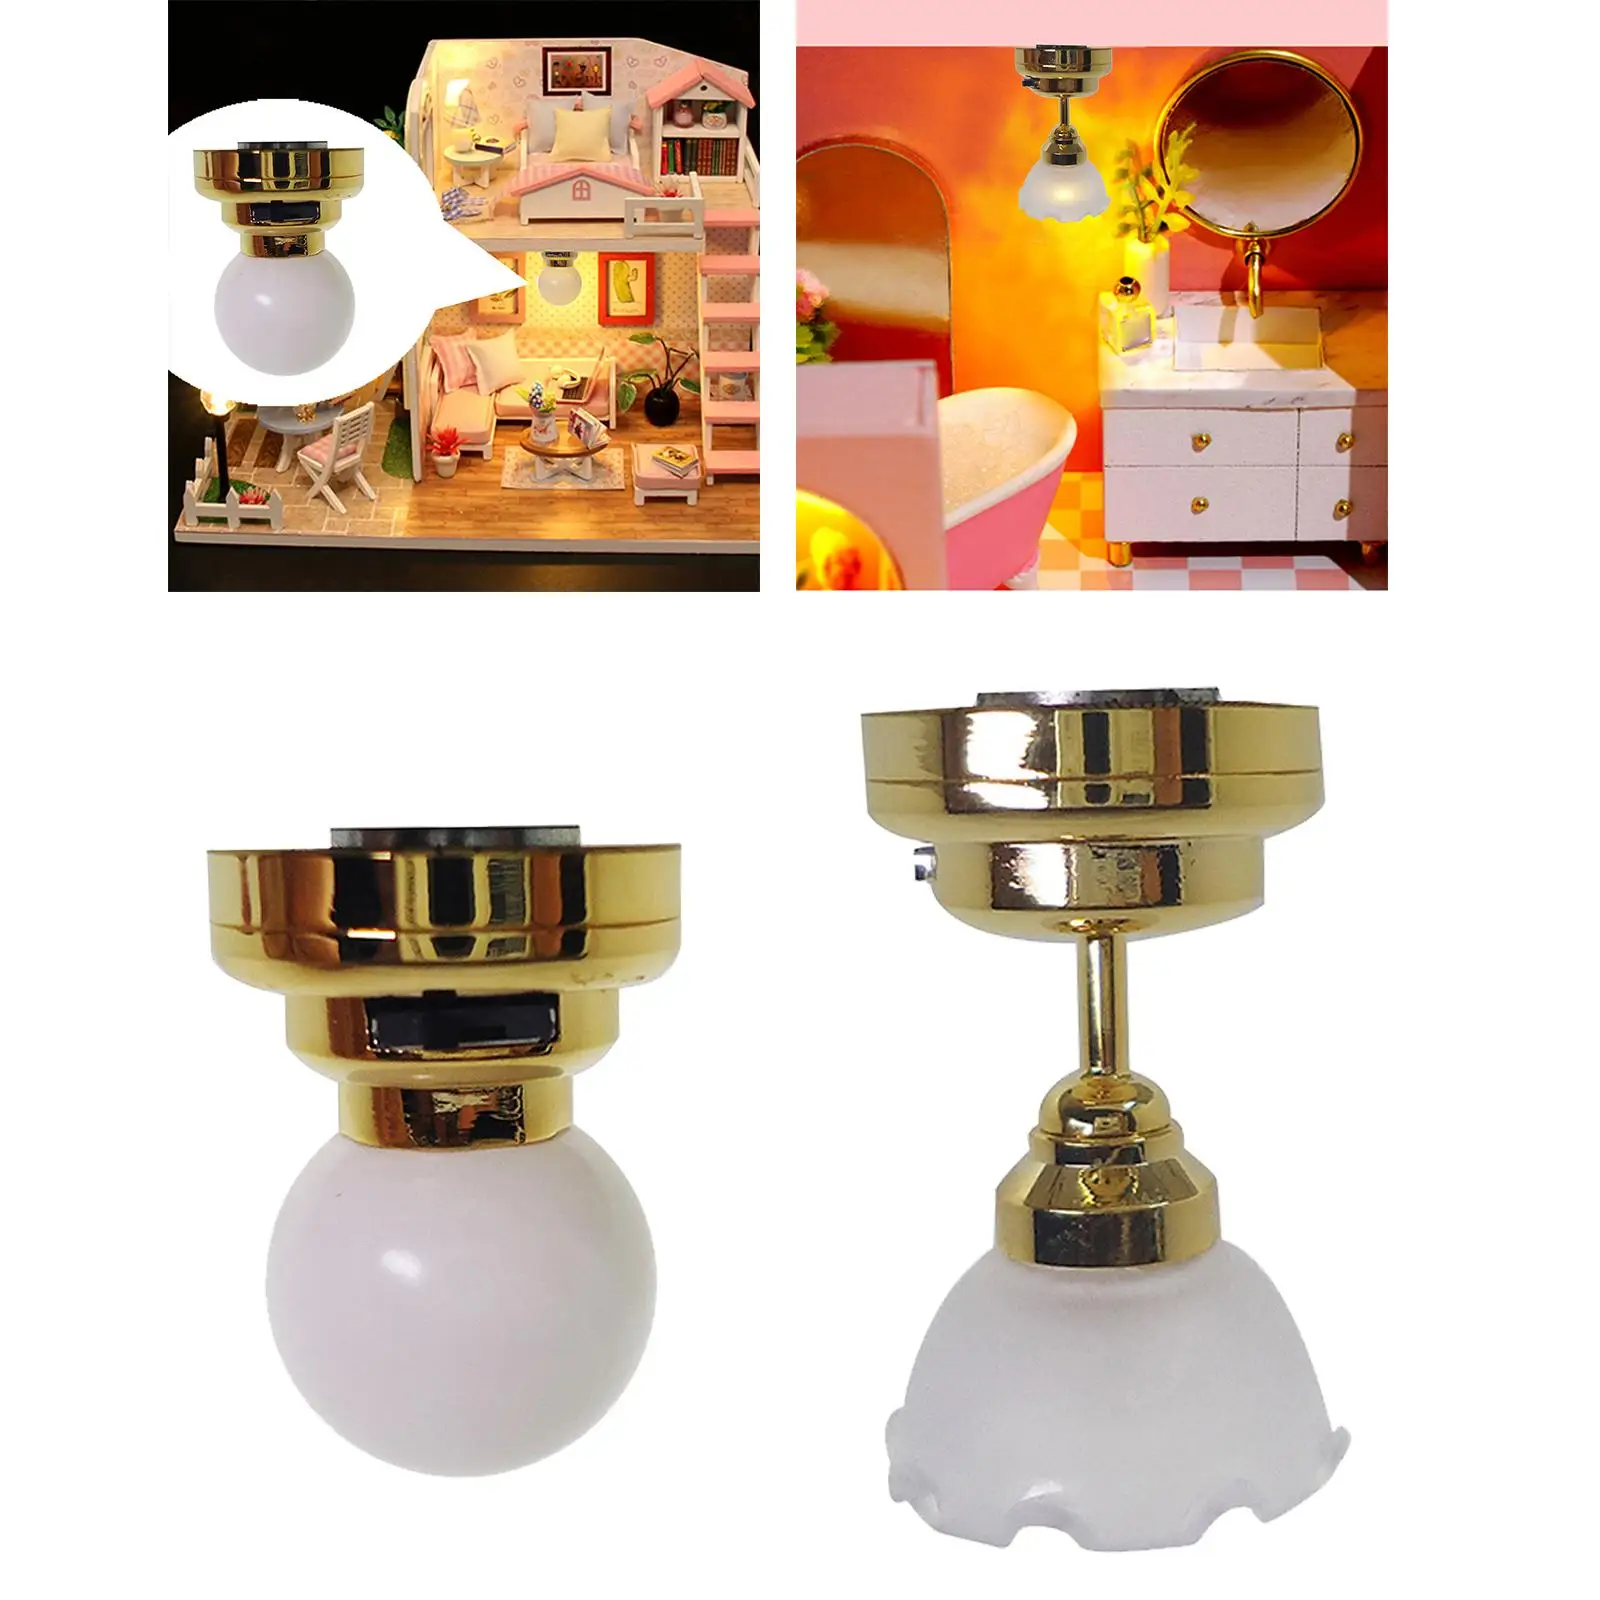 Mini Ceiling Ligh Miniature Scene Model 1:12 Dollhouse Ceiling LED Lamp Dollhouse Furniture for Bedroom Dollhouse Diorama Decor